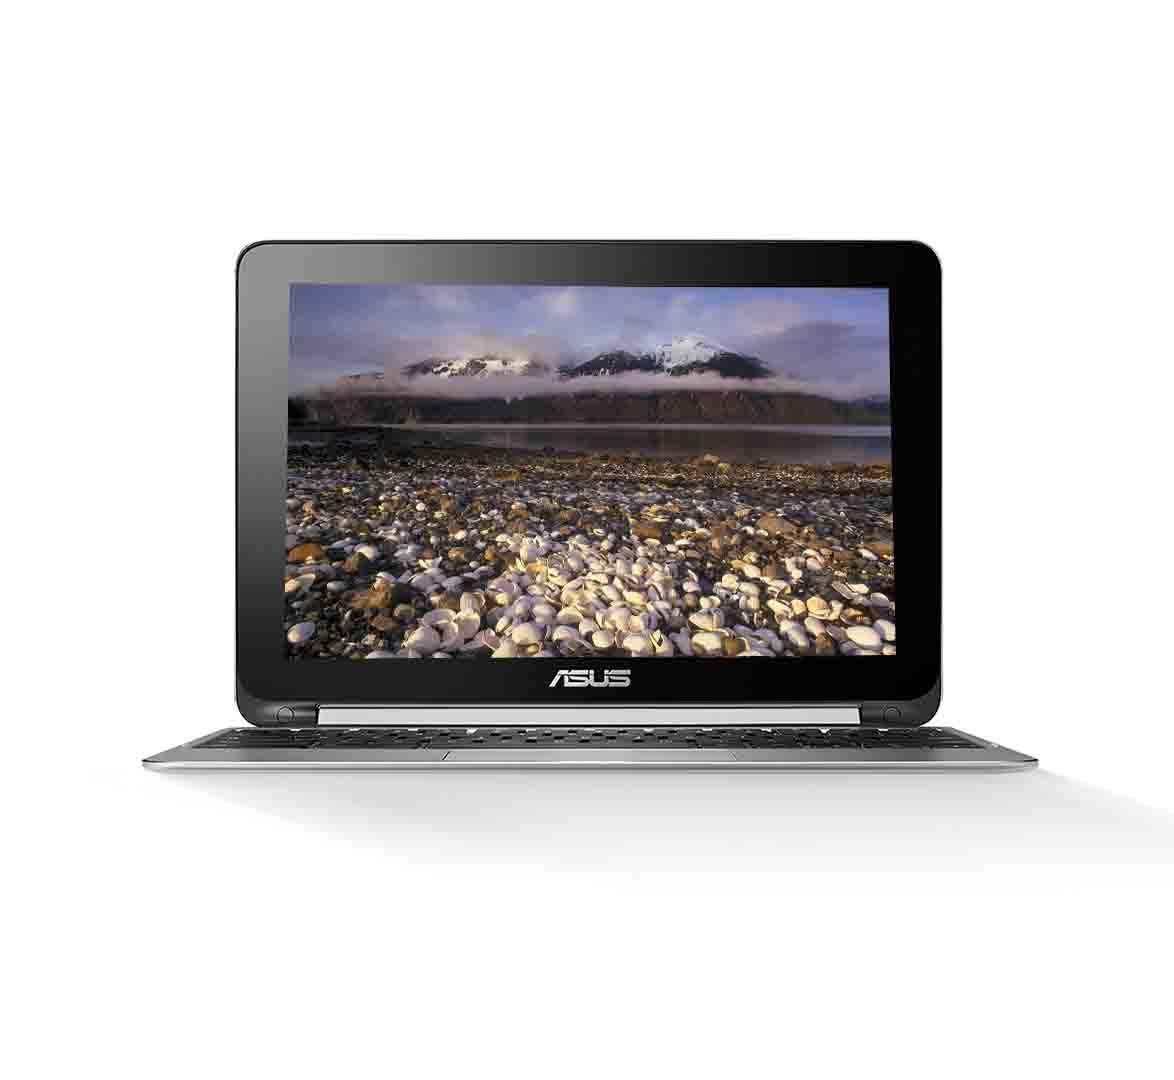 Asus Chromebook Flip C100PA Business Laptop, Intel ATOM CPU, 4GB RAM, 16GB HDD, 10.1 inch Touchscreen, Windows 10 Pro, Refurbished Laptop